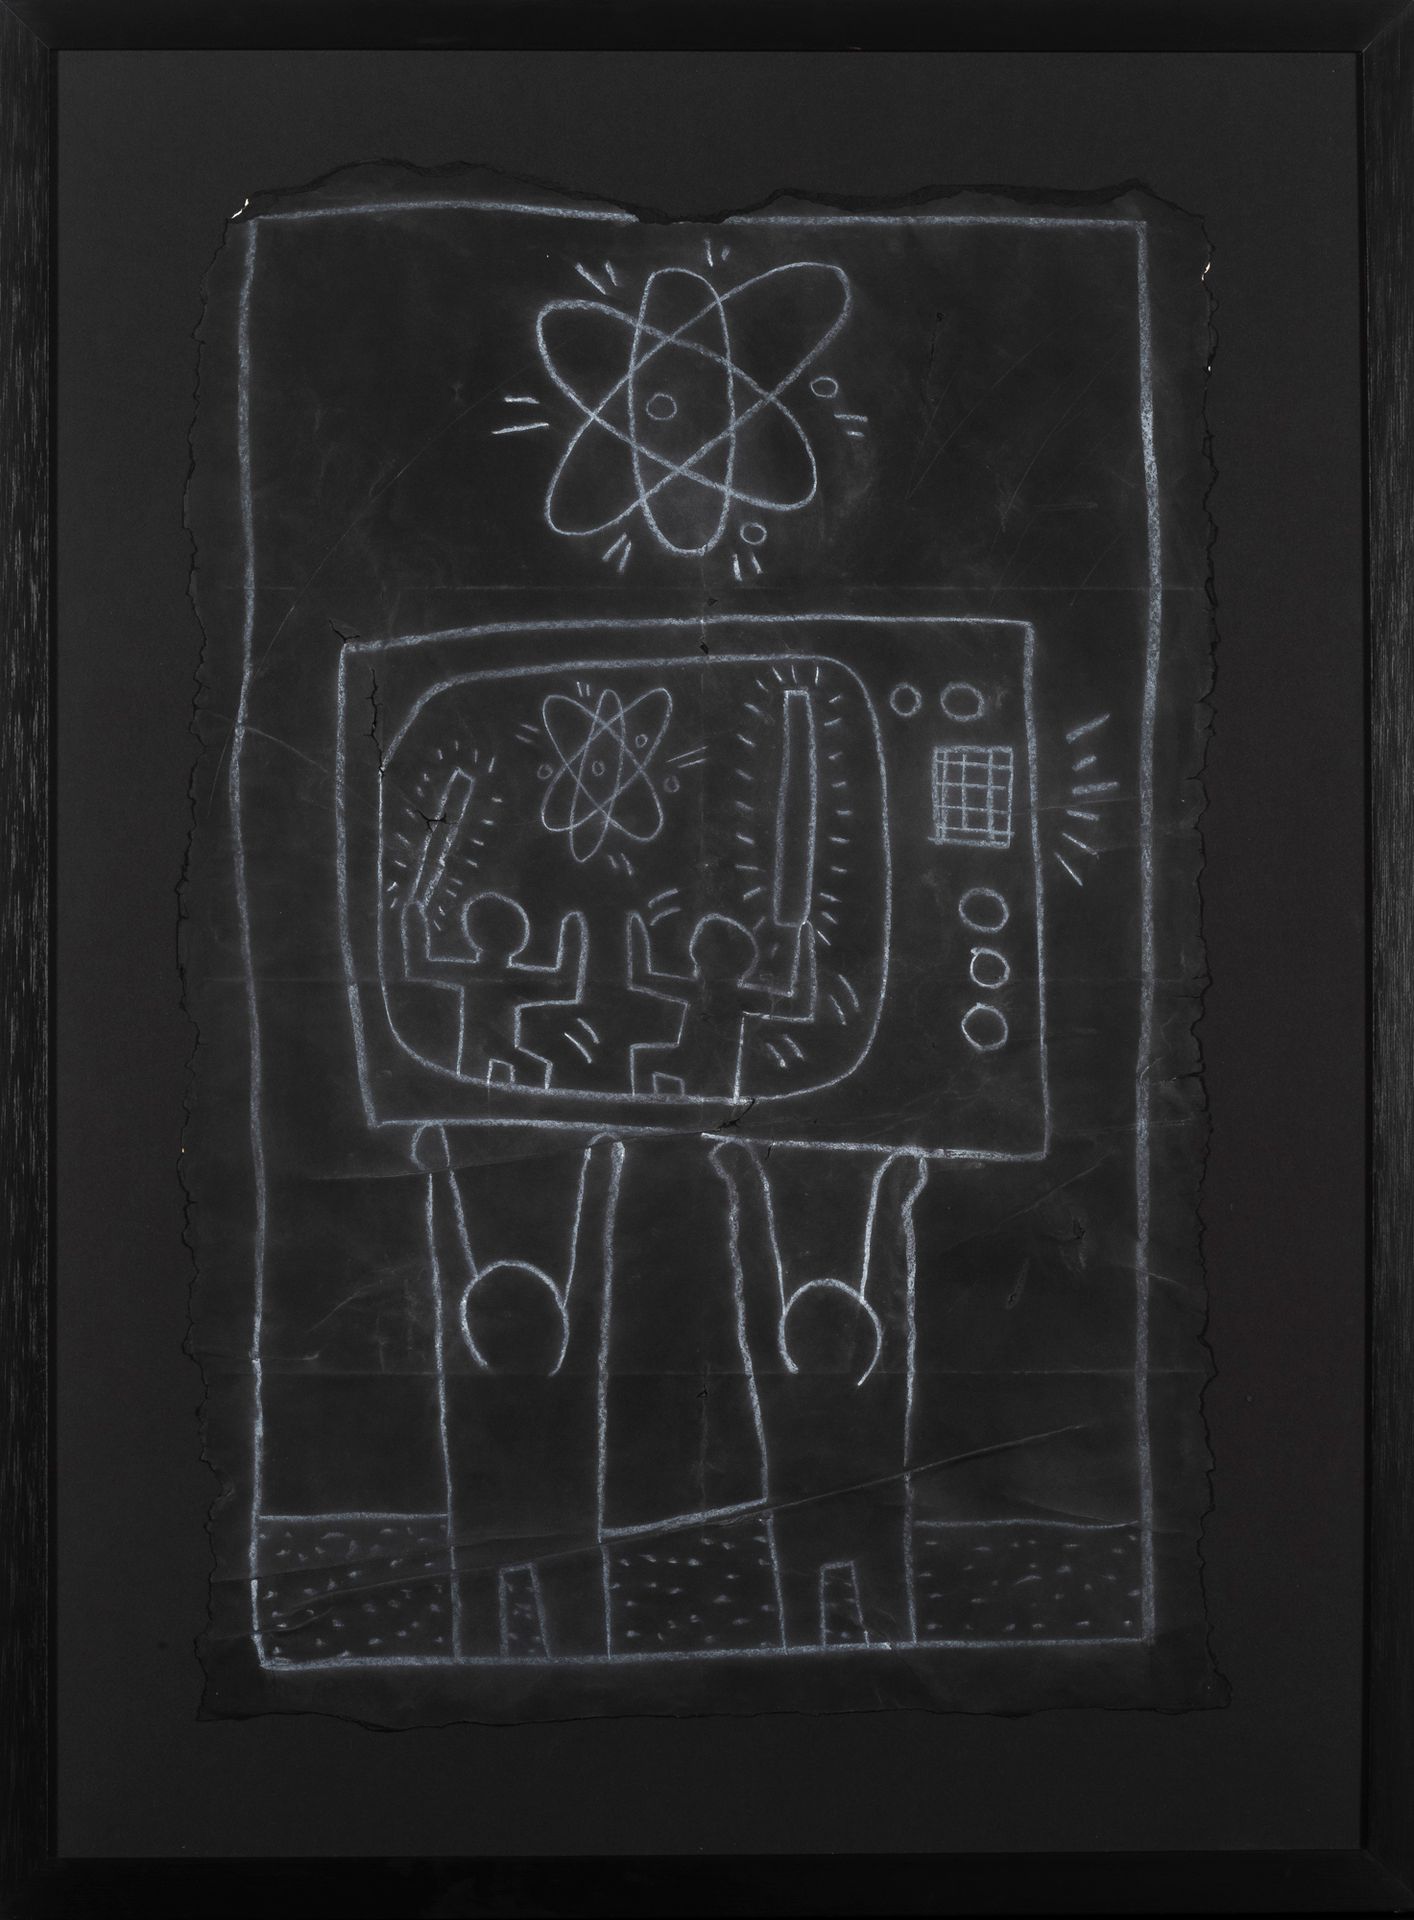 Keith Haring (1958-1990) Subway Drawing
Kreide auf schwarzem Papier.
Krijt op zw&hellip;